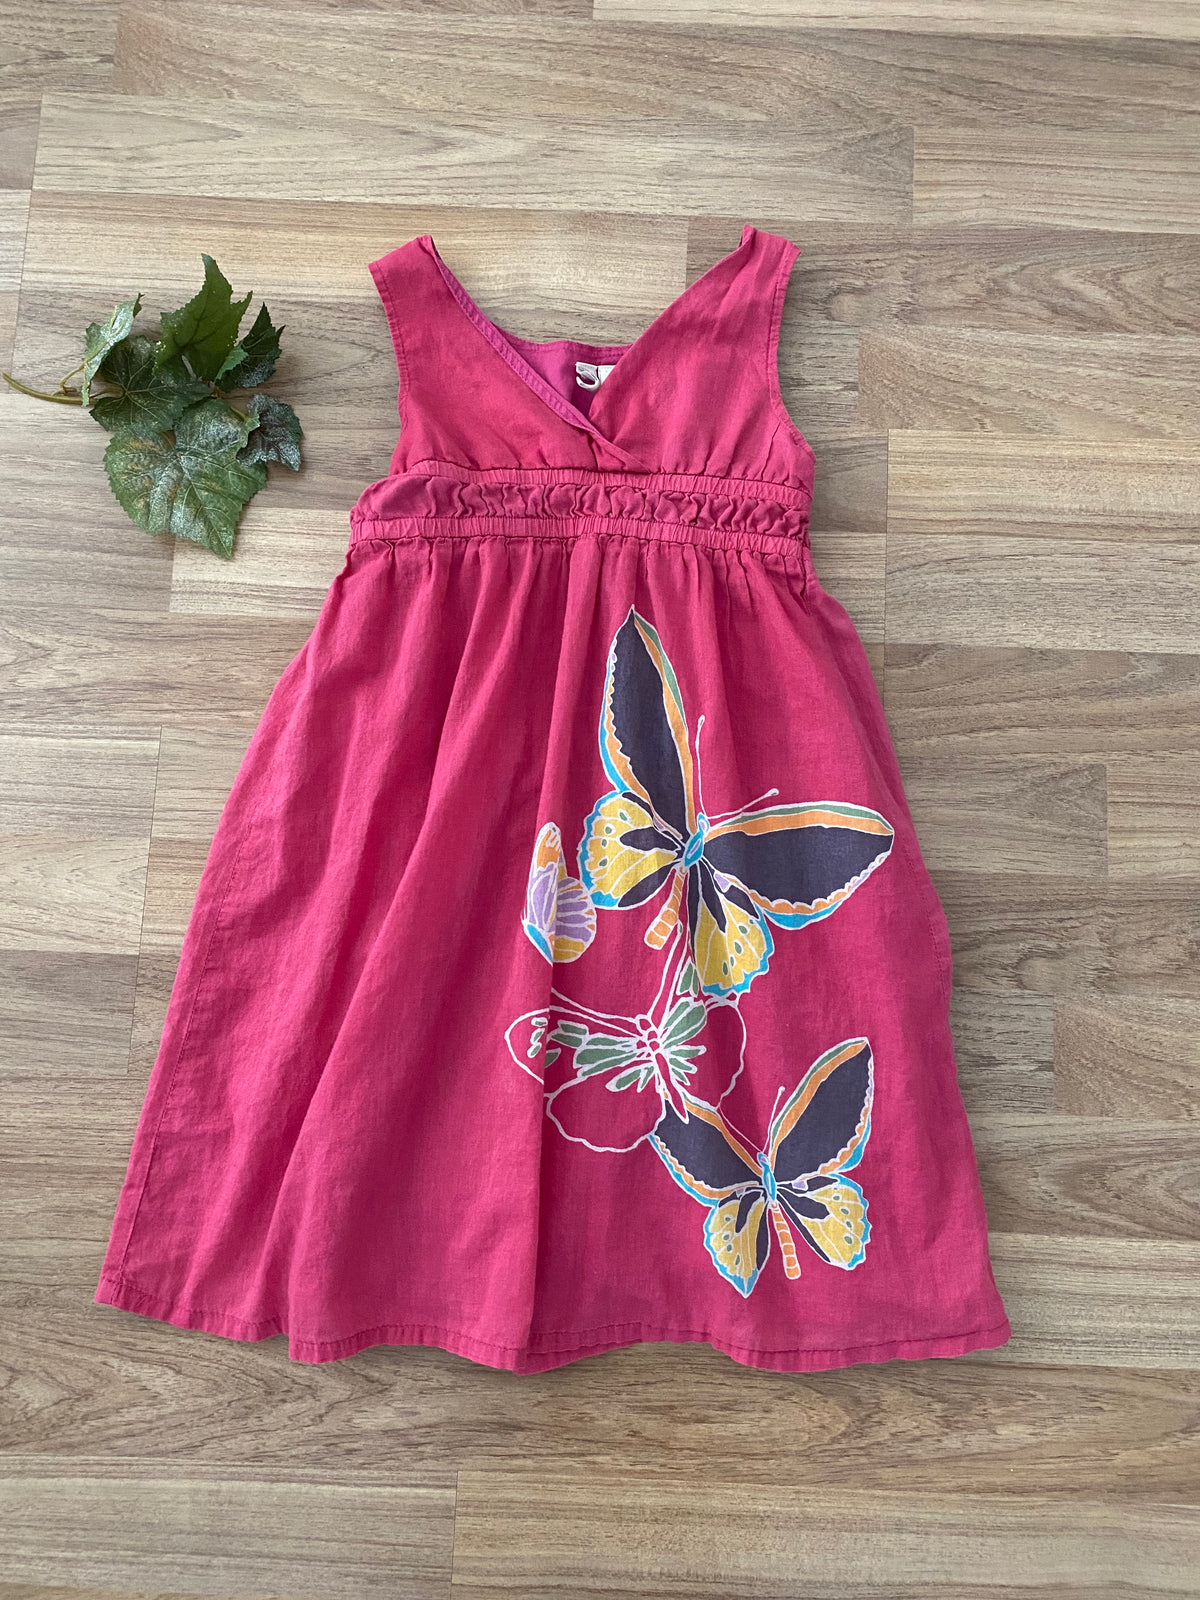 Dress (Girls Size 6-7)